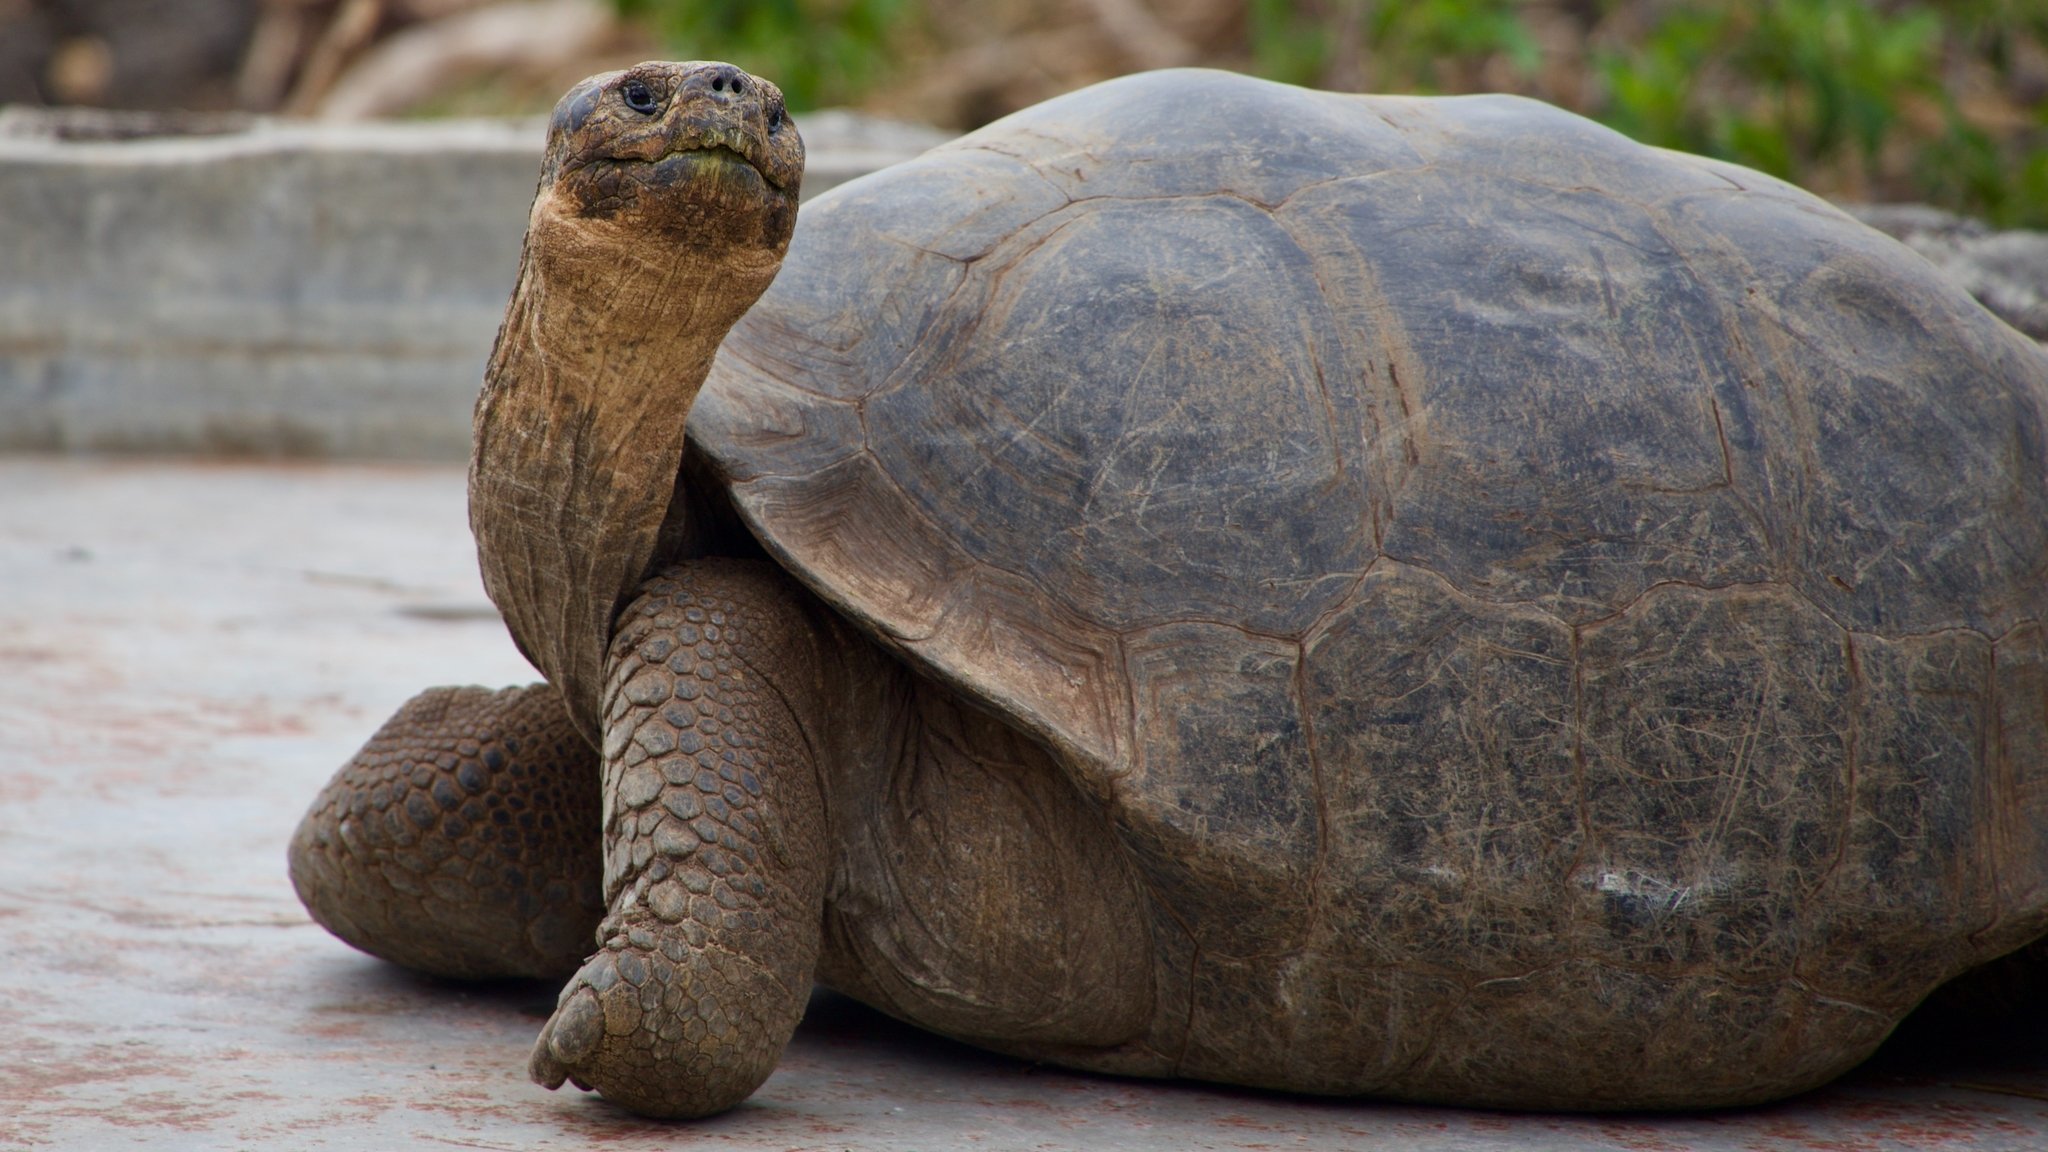 A modern tortoise?